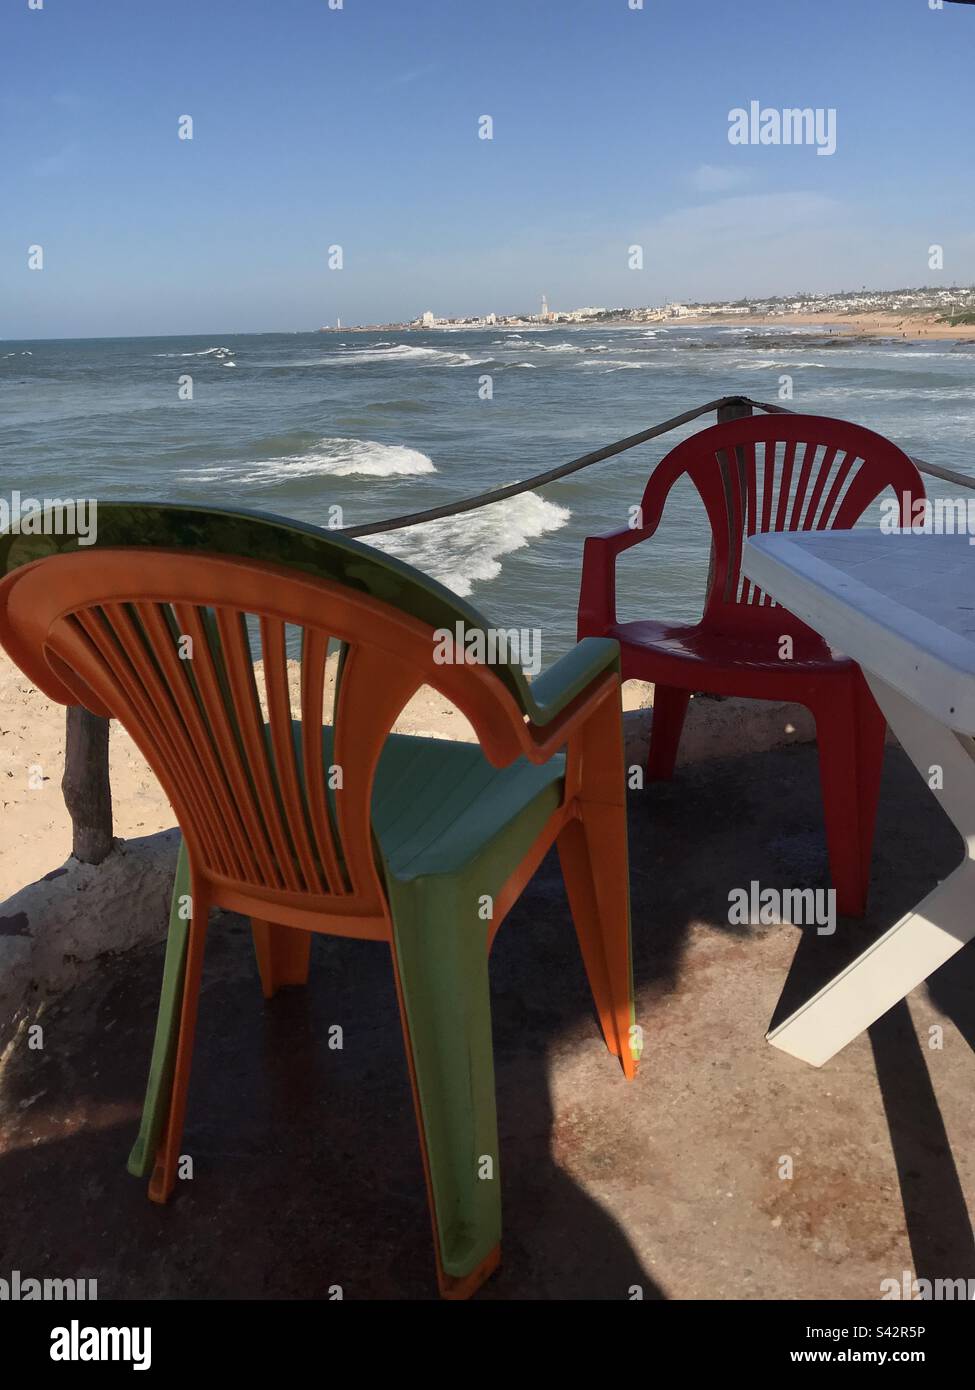 Monobloc Chairs on beach Stock Photo